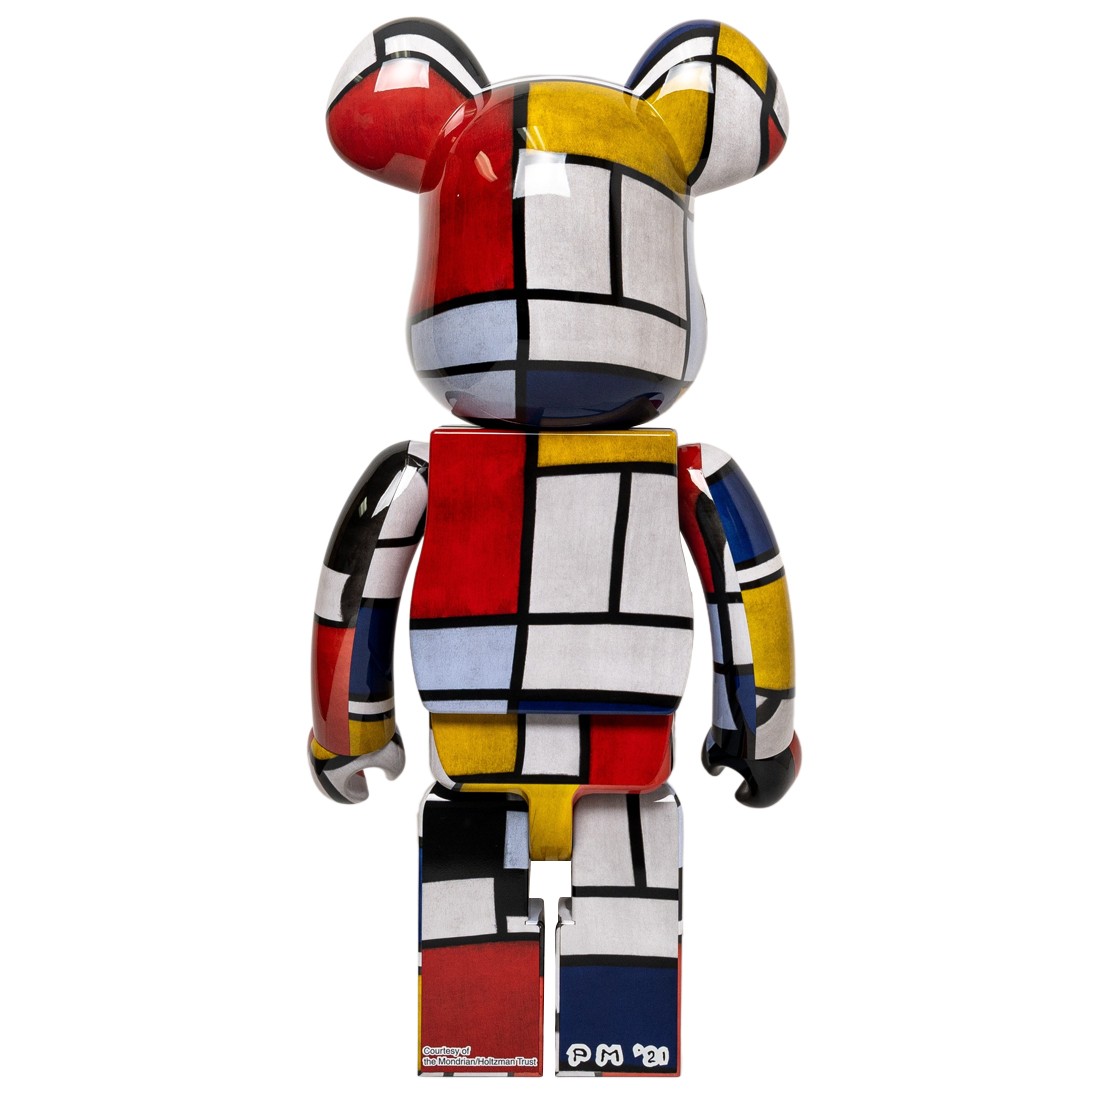 Medicom Piet Mondrian 1000% Bearbrick Figure (white)